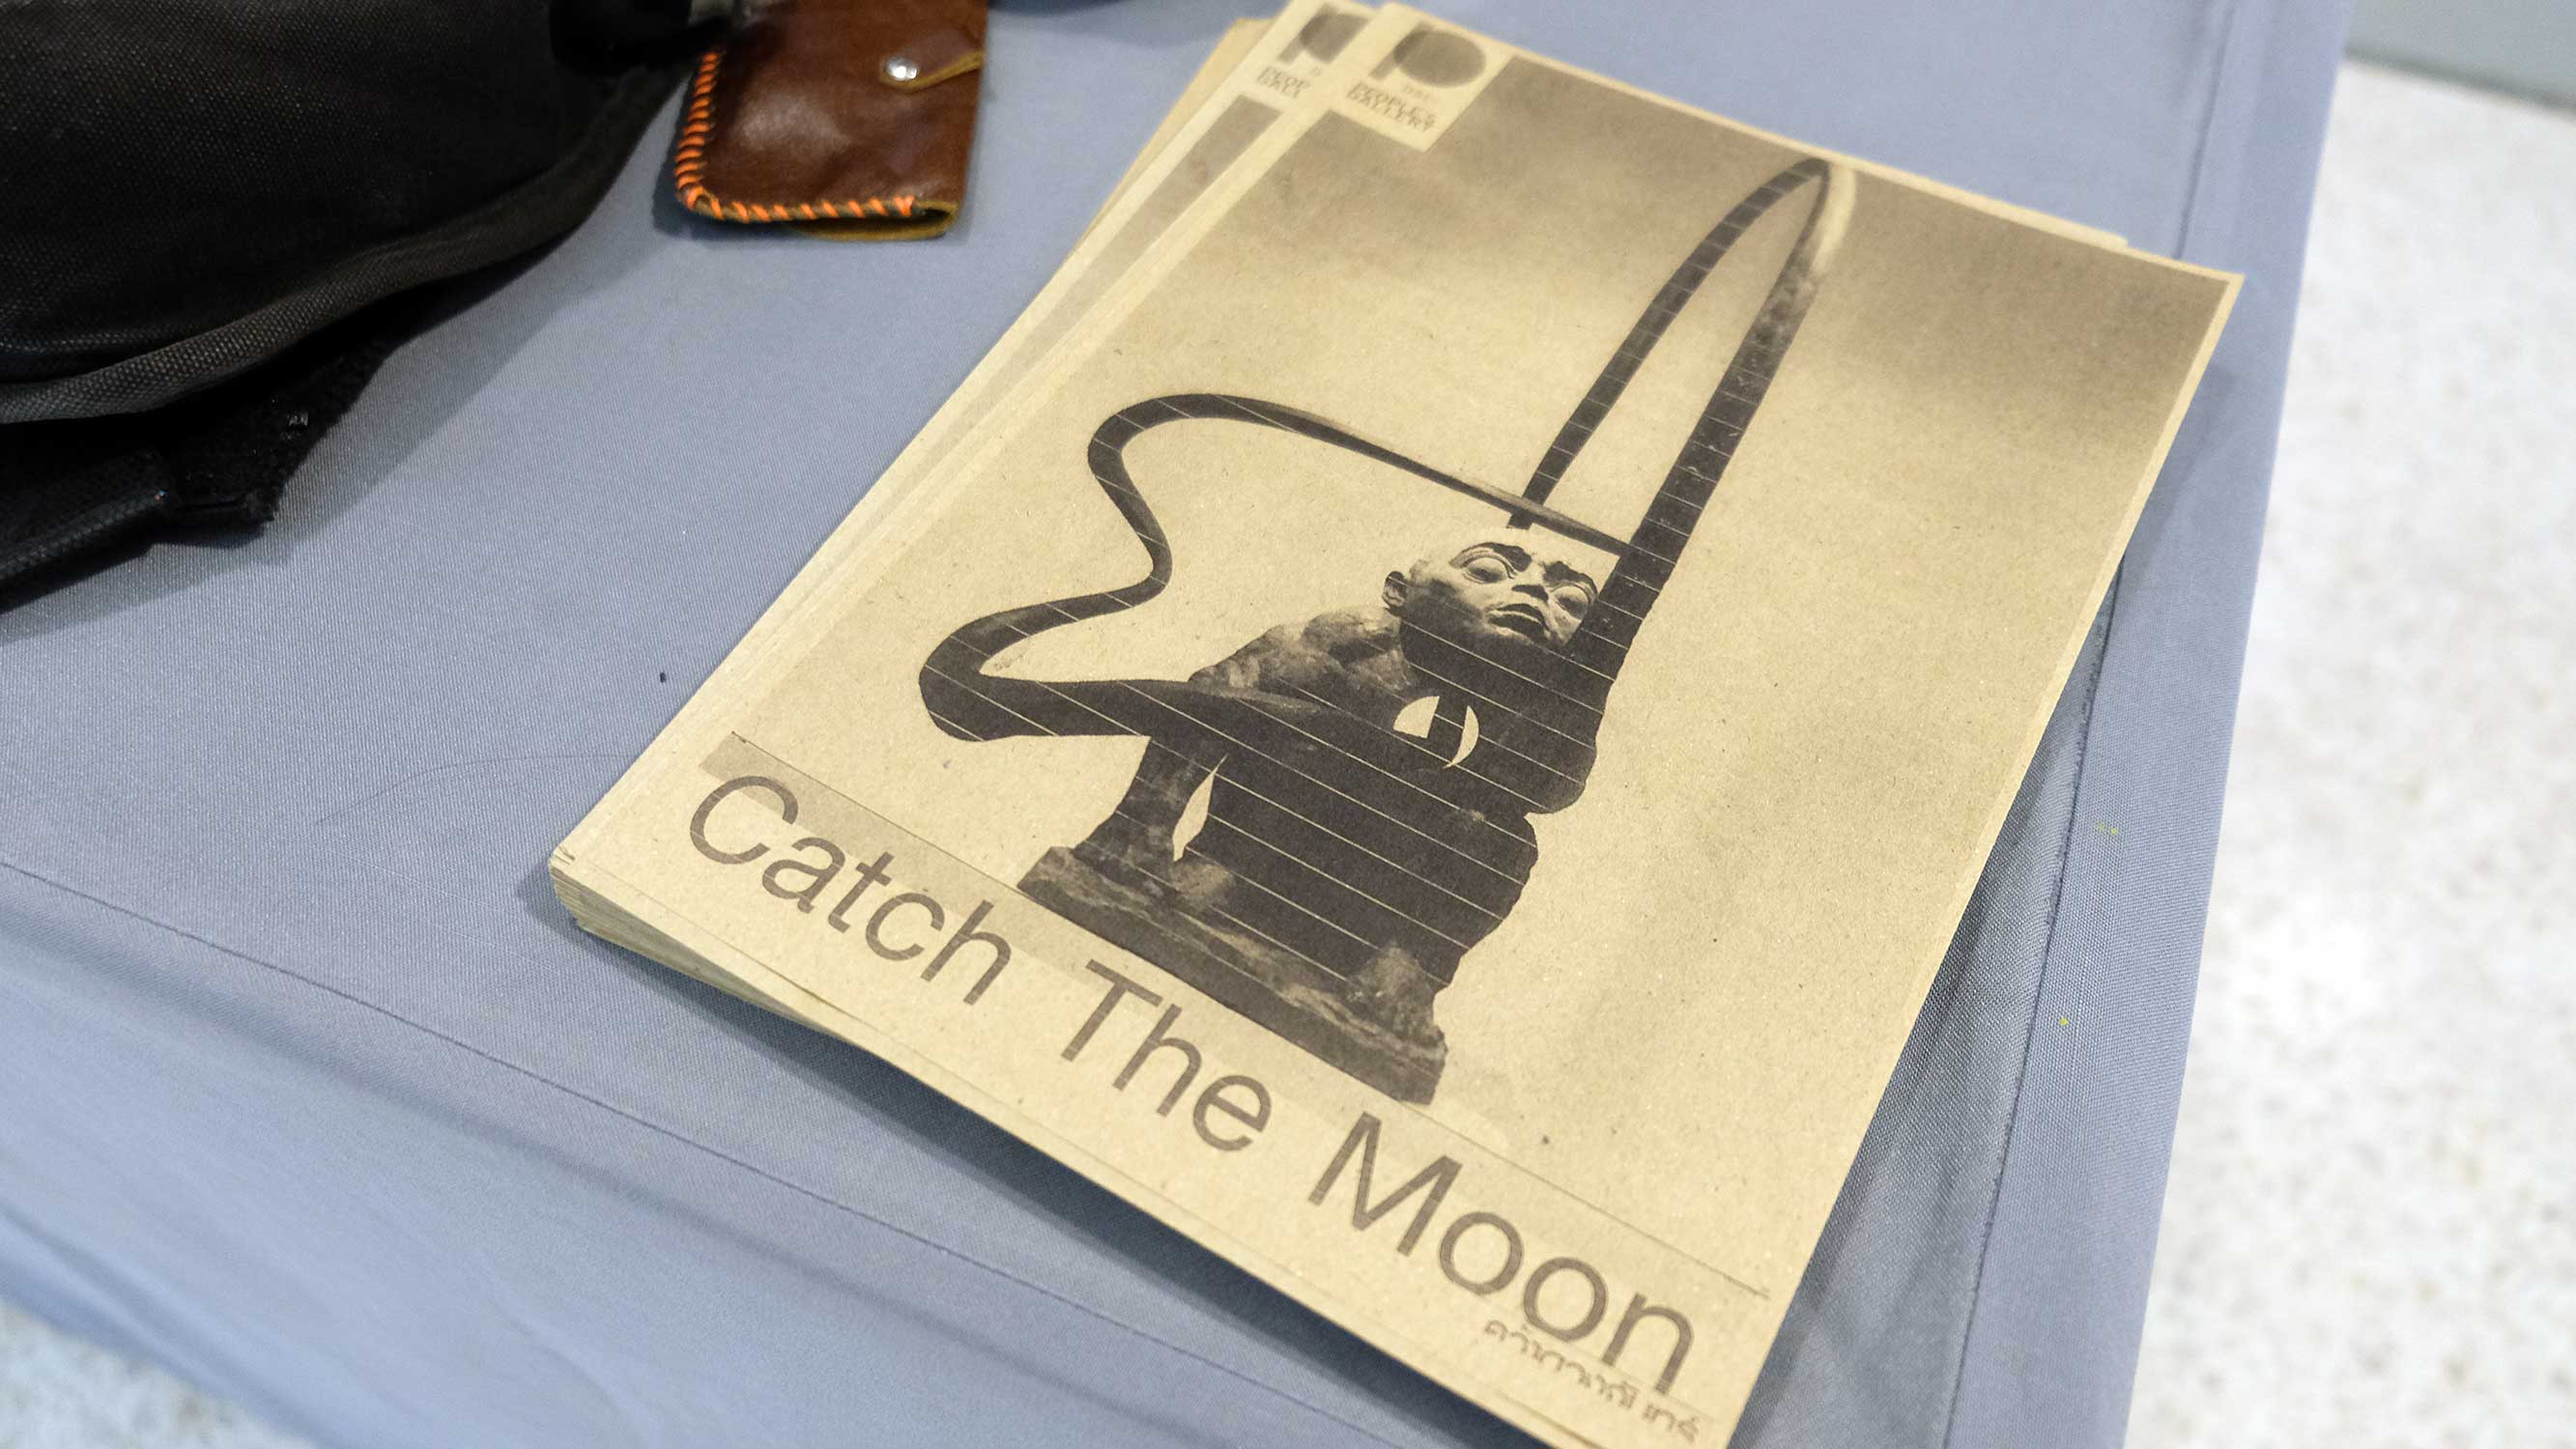 Exhibition Catch The Moon By Ong-arj Loeamornpagsin | นิทรรศการ คว้าดวงจันทร์ โดย องอาจ โล่อมรปักษิณ